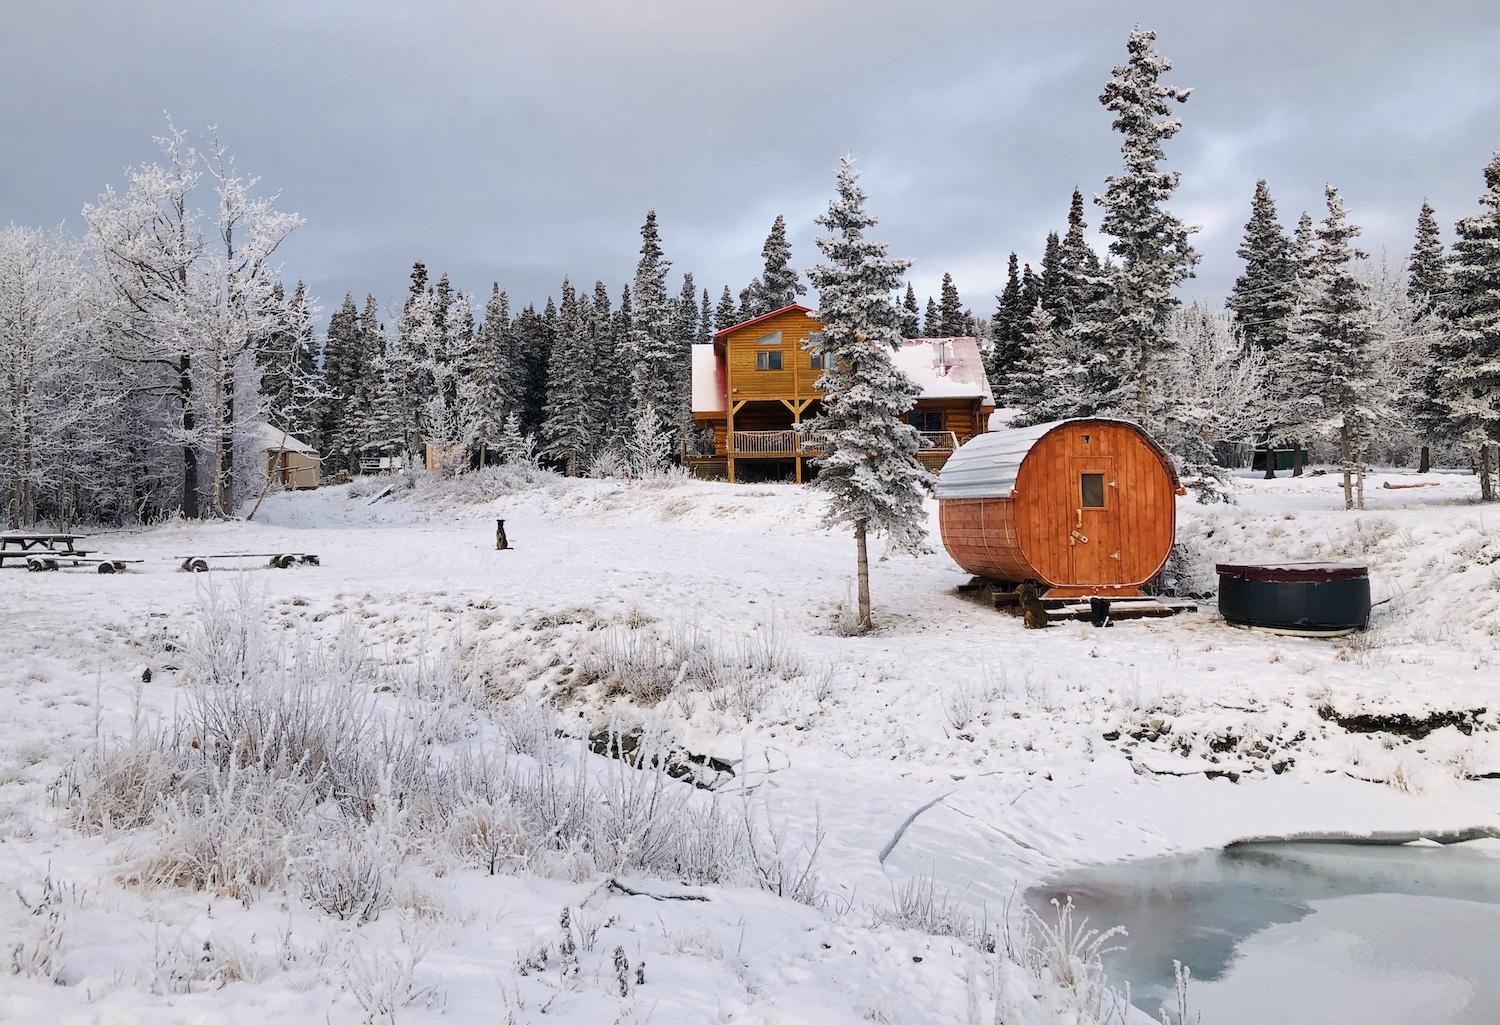 Mount Logan Ecolodge Cabin in Winter